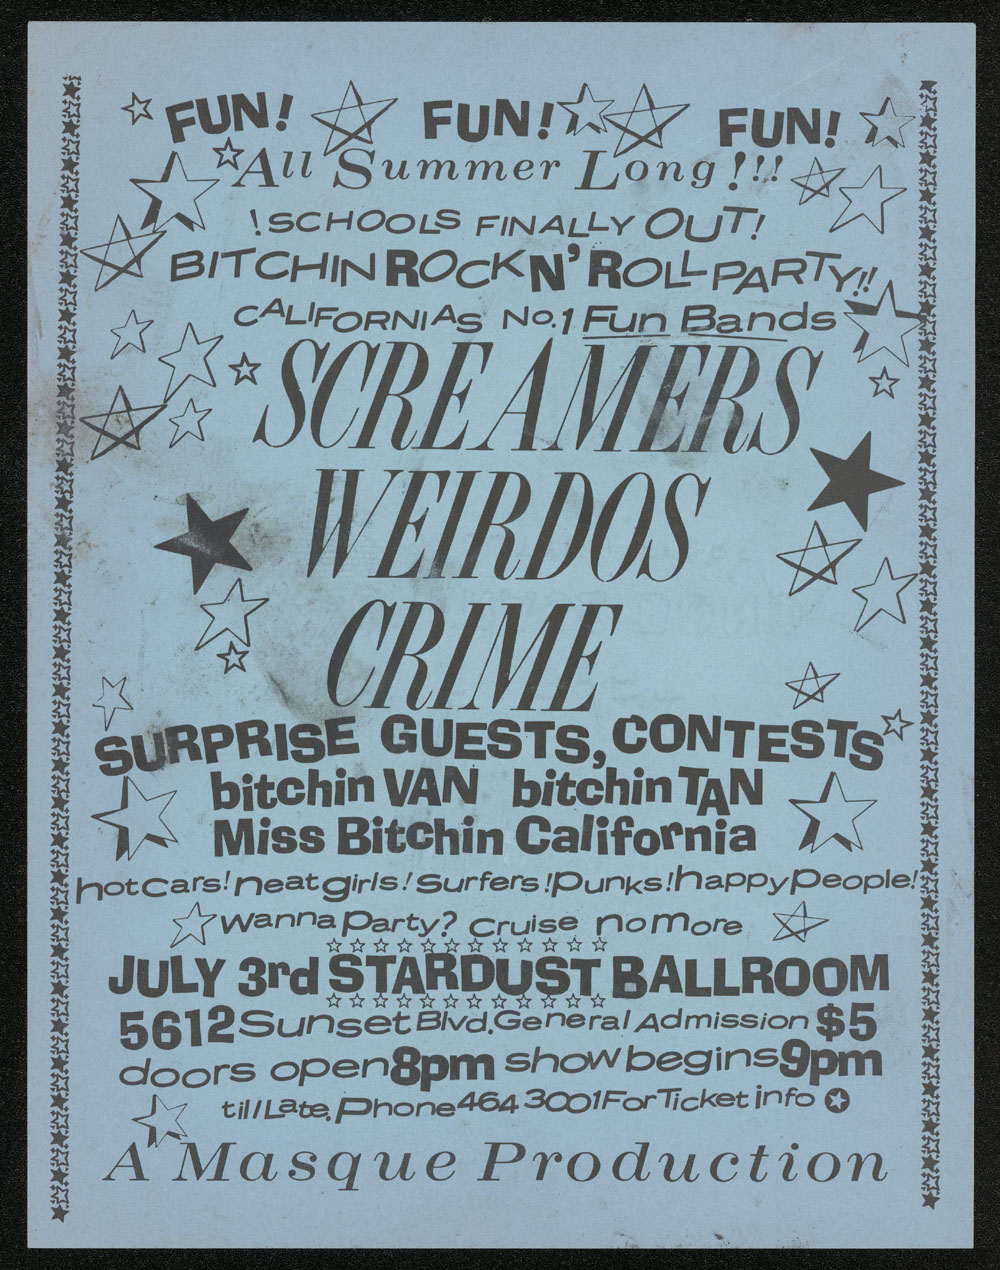 SCREAMERS w/ Weirdos, Crime at Stardust Ballroom